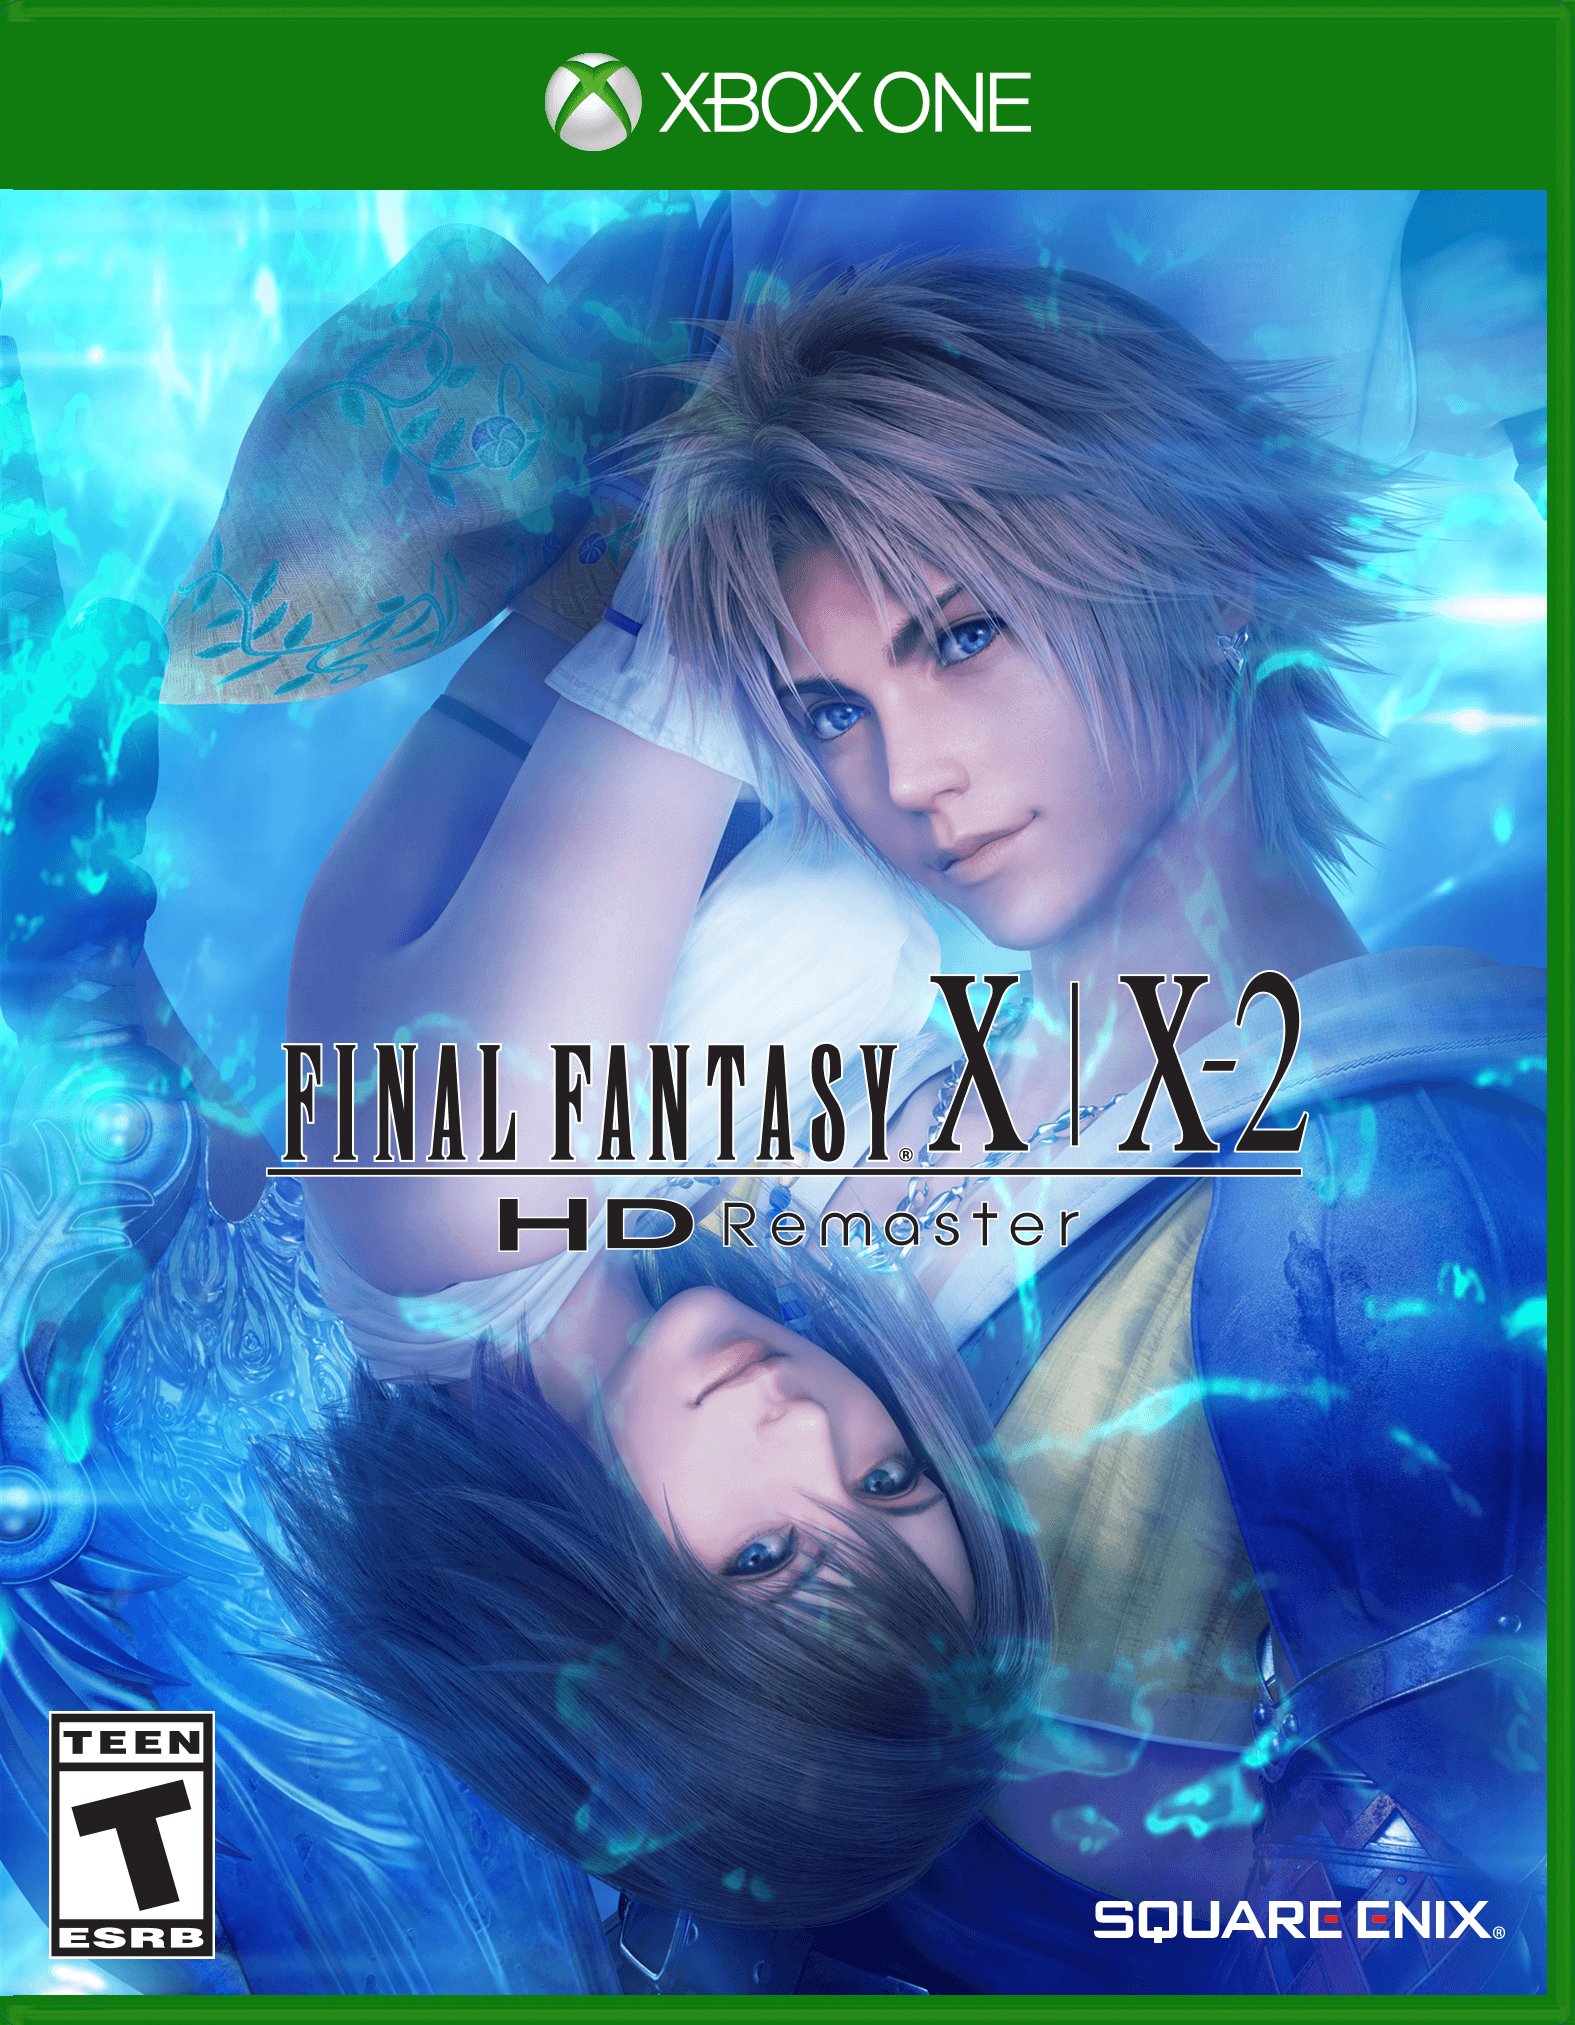 Final Fantasy X + X2 HD, Square Enix, Xbox One, 662248922065 - image 2 of 2